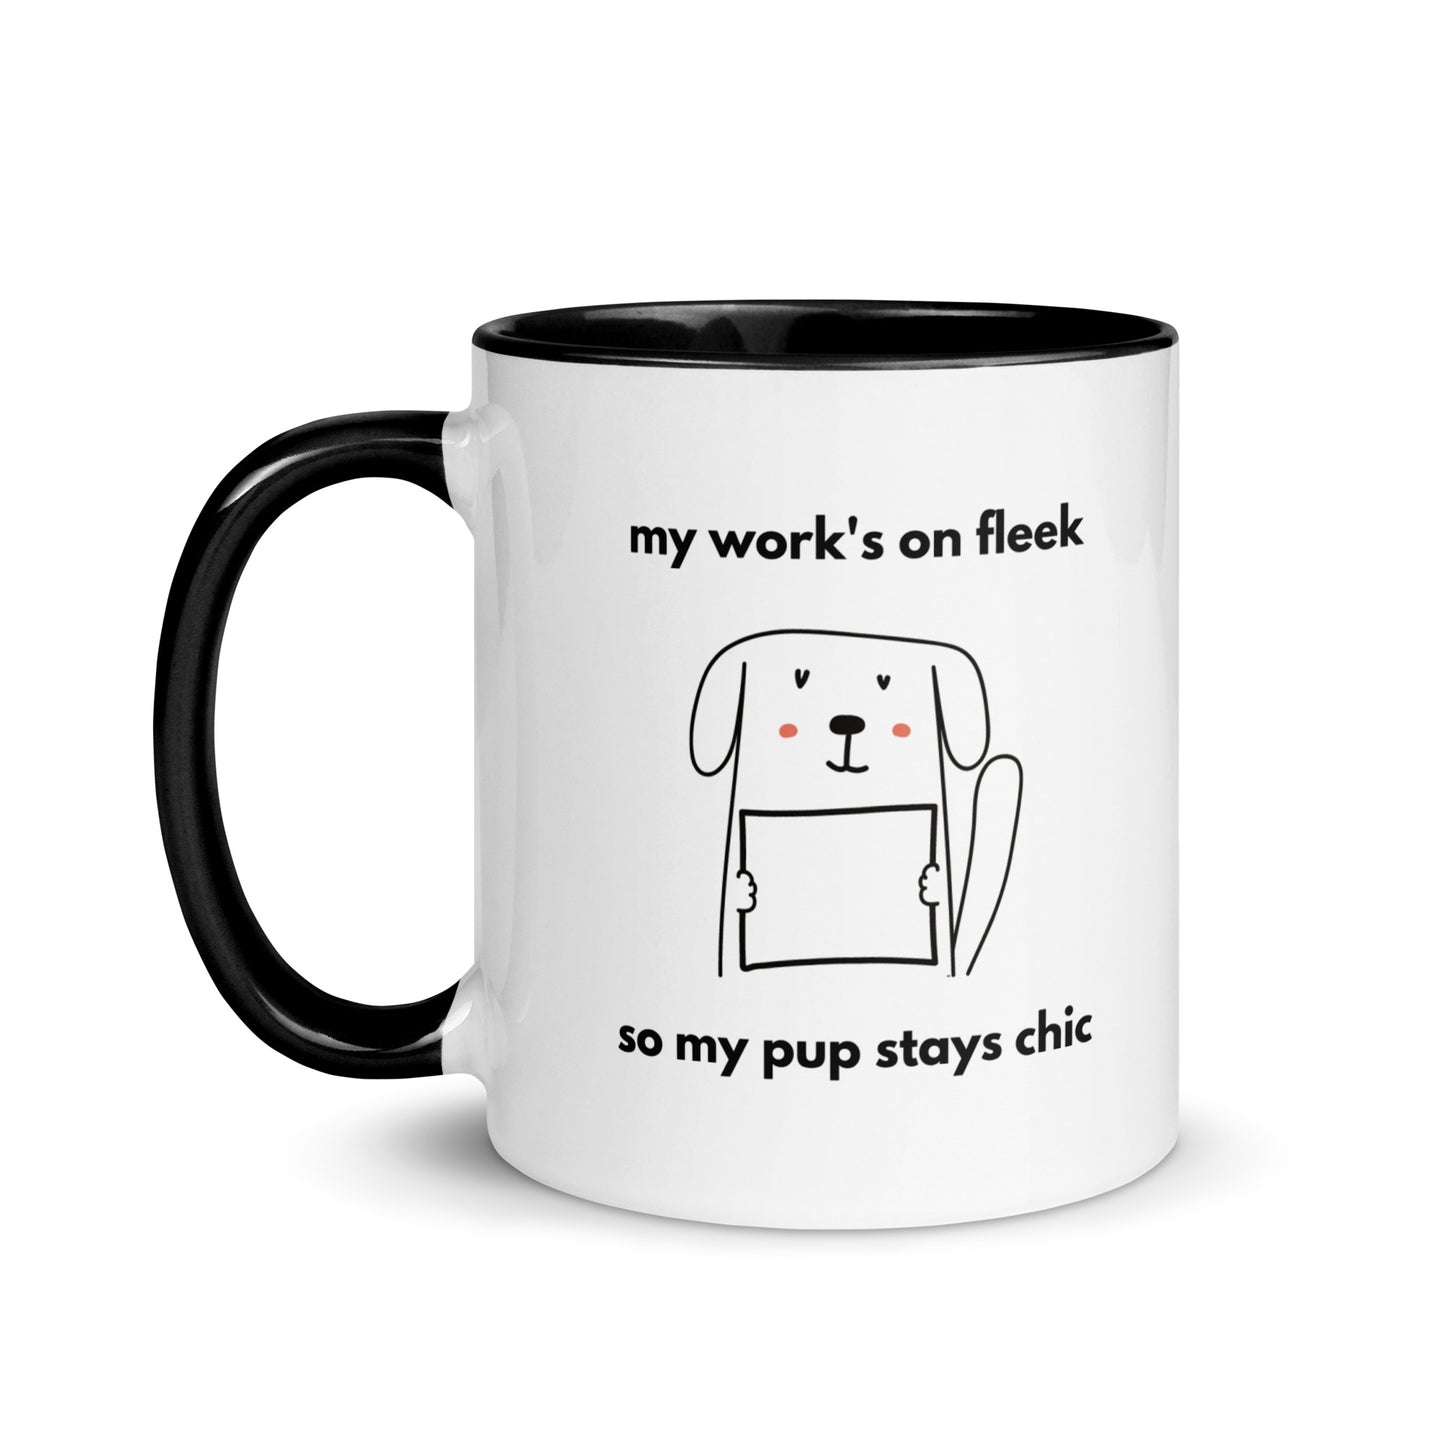 My work's on fleek so my pup stays chic mug